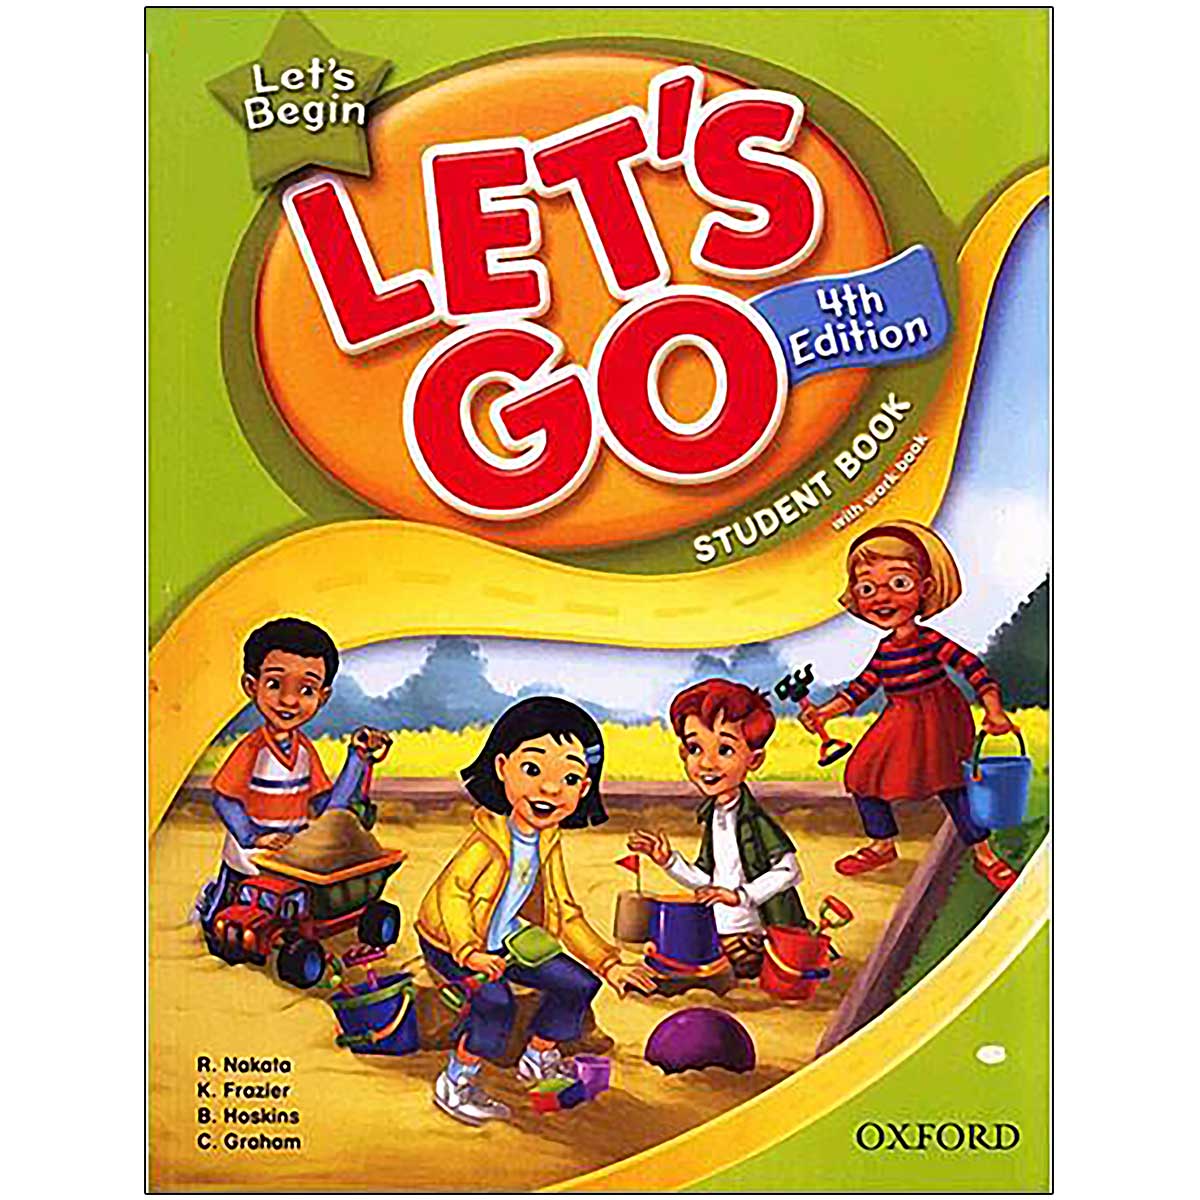 Английский язык pupils book. Книга Lets go. English for children книга. Книга для английского языка Oxford. Книги Lets go Oxford.